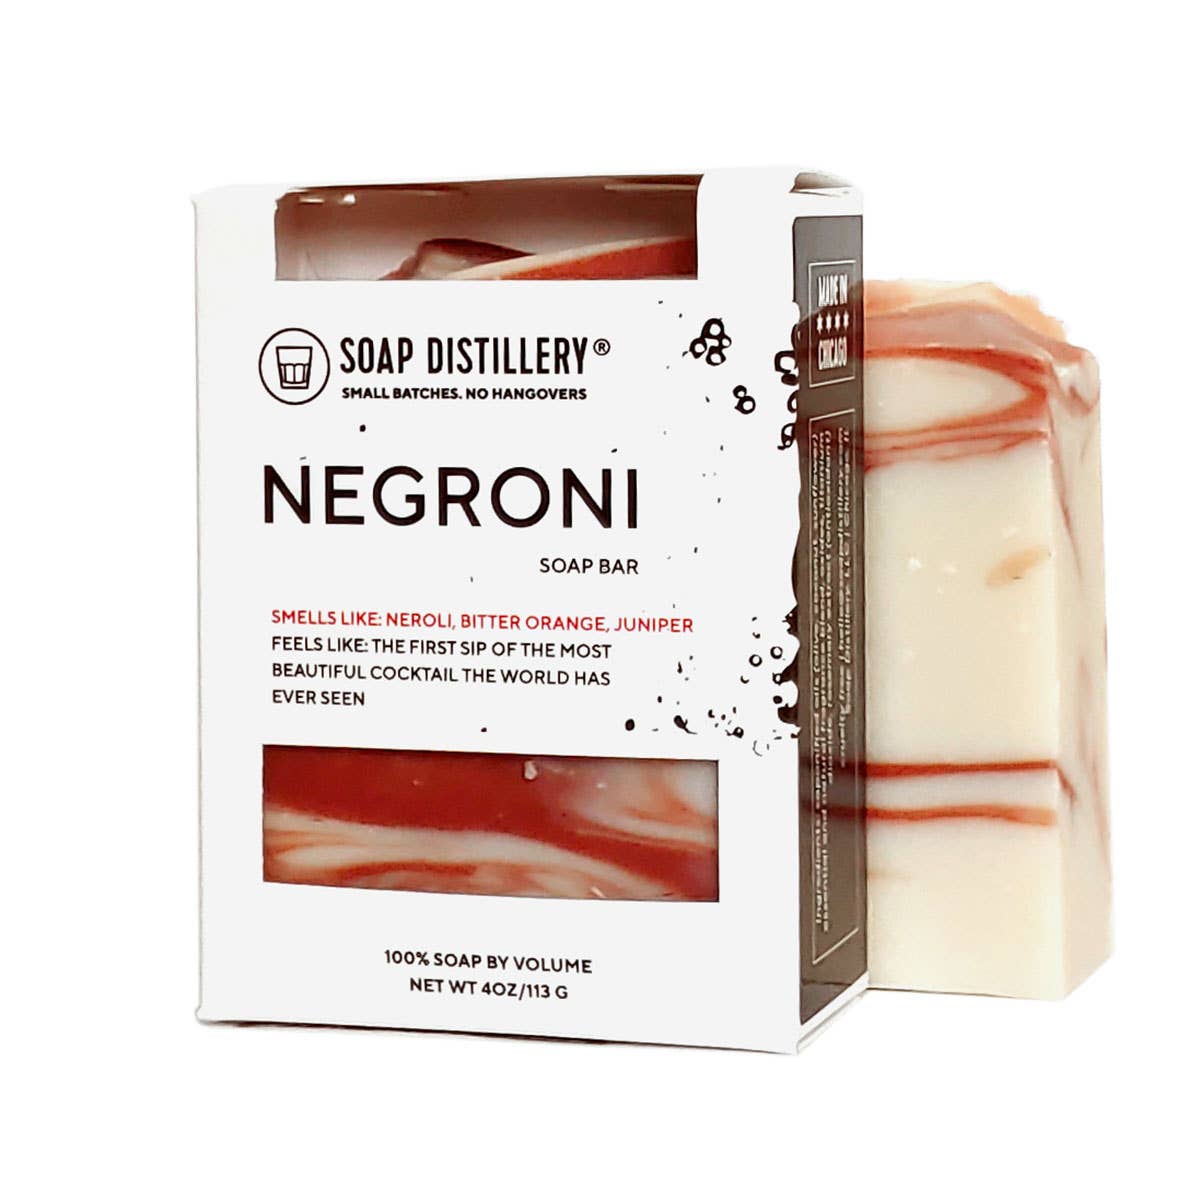 SALE! Negroni Soap Bar